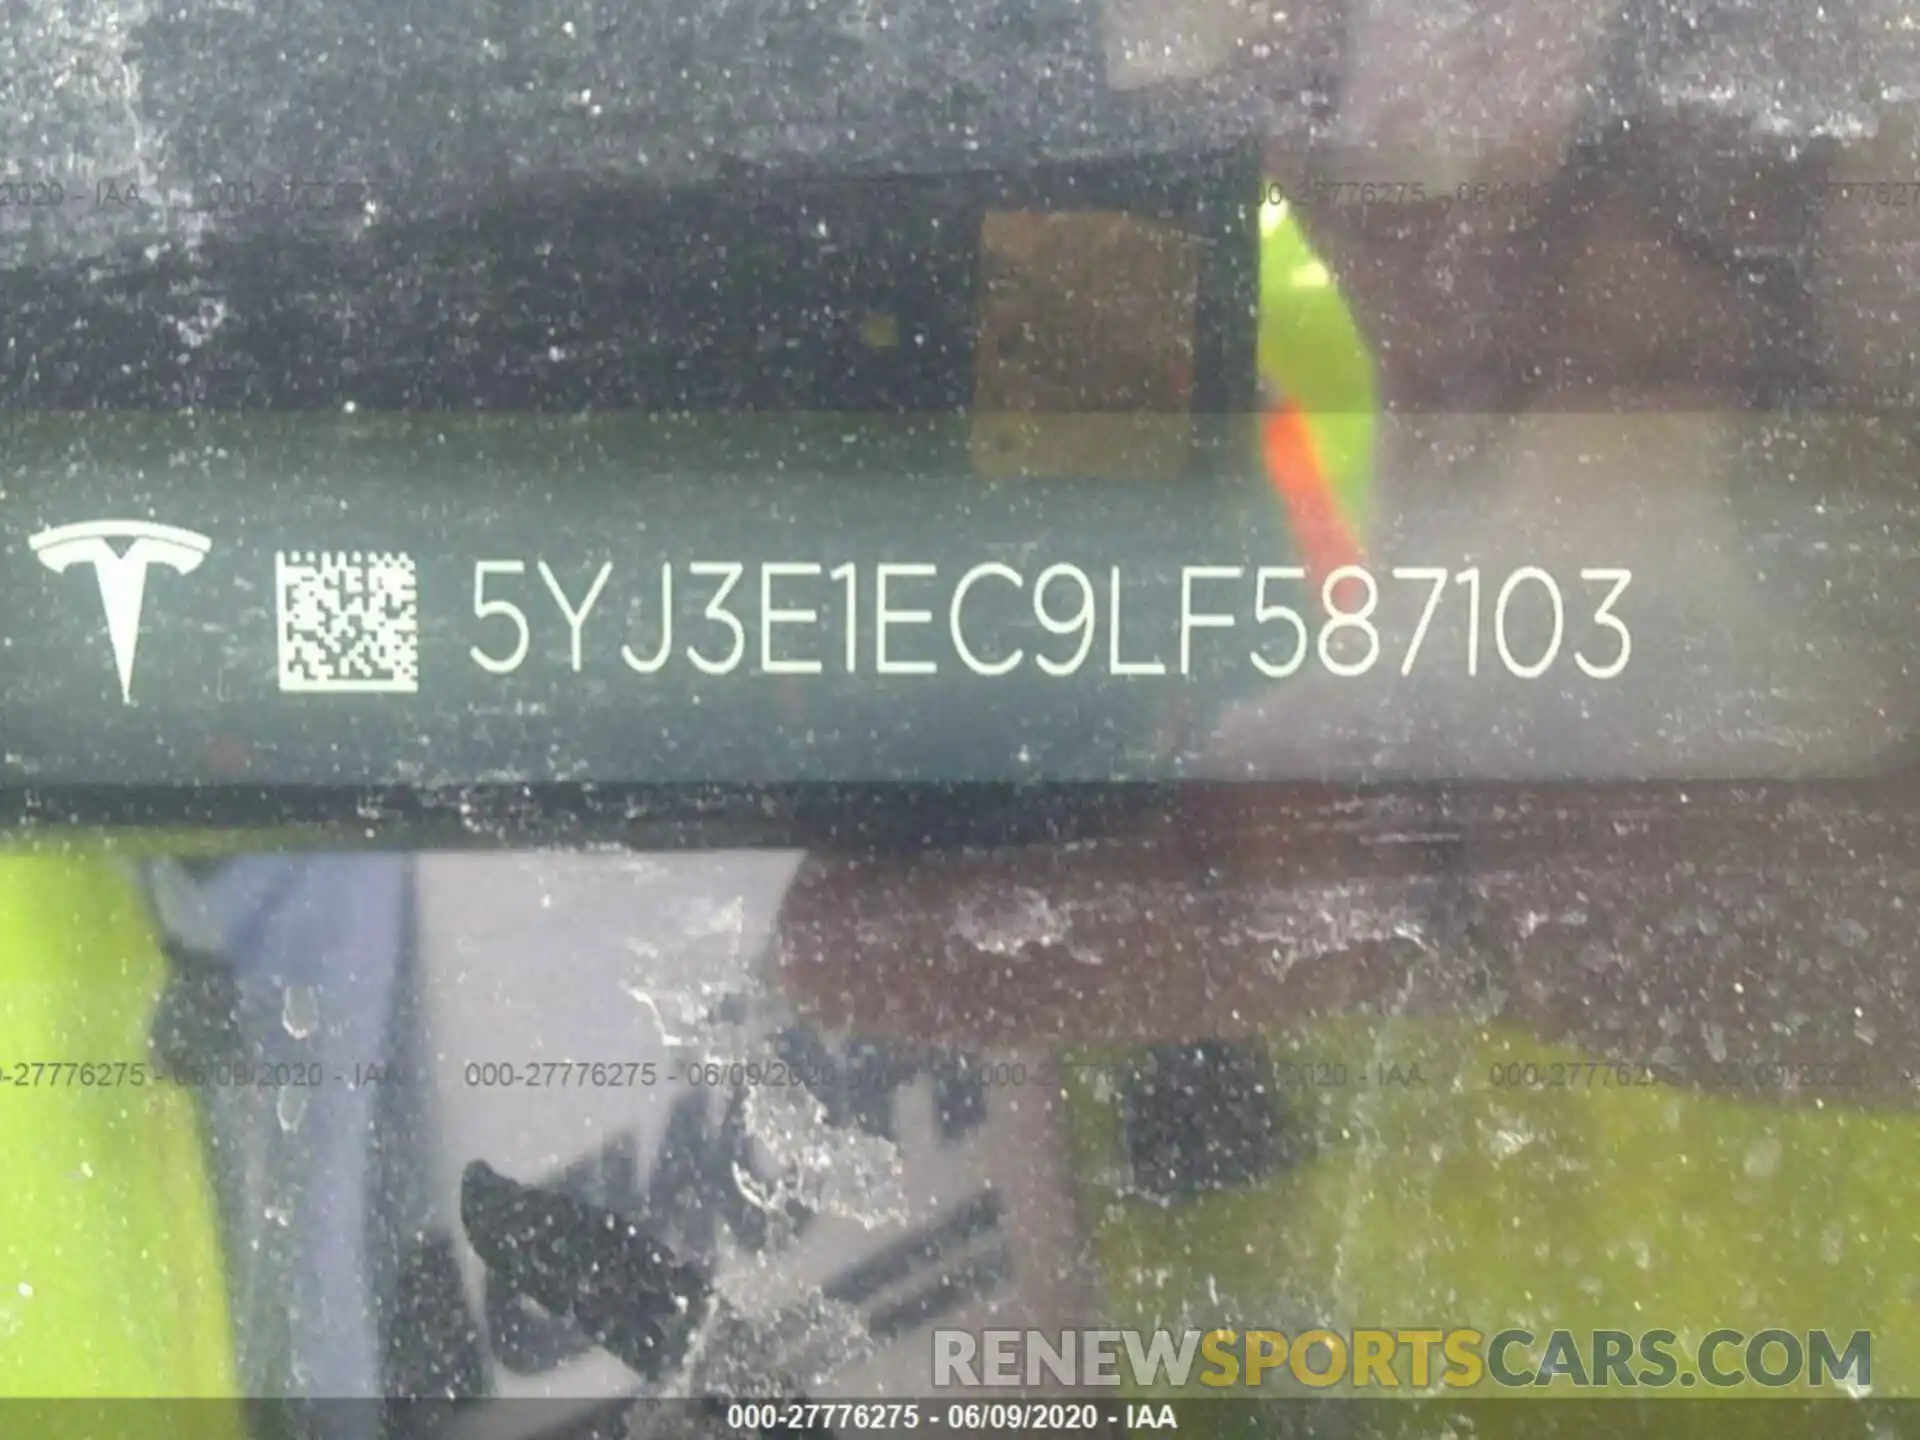 9 Photograph of a damaged car 5YJ3E1EC9LF587103 TESLA MODEL 3 2020